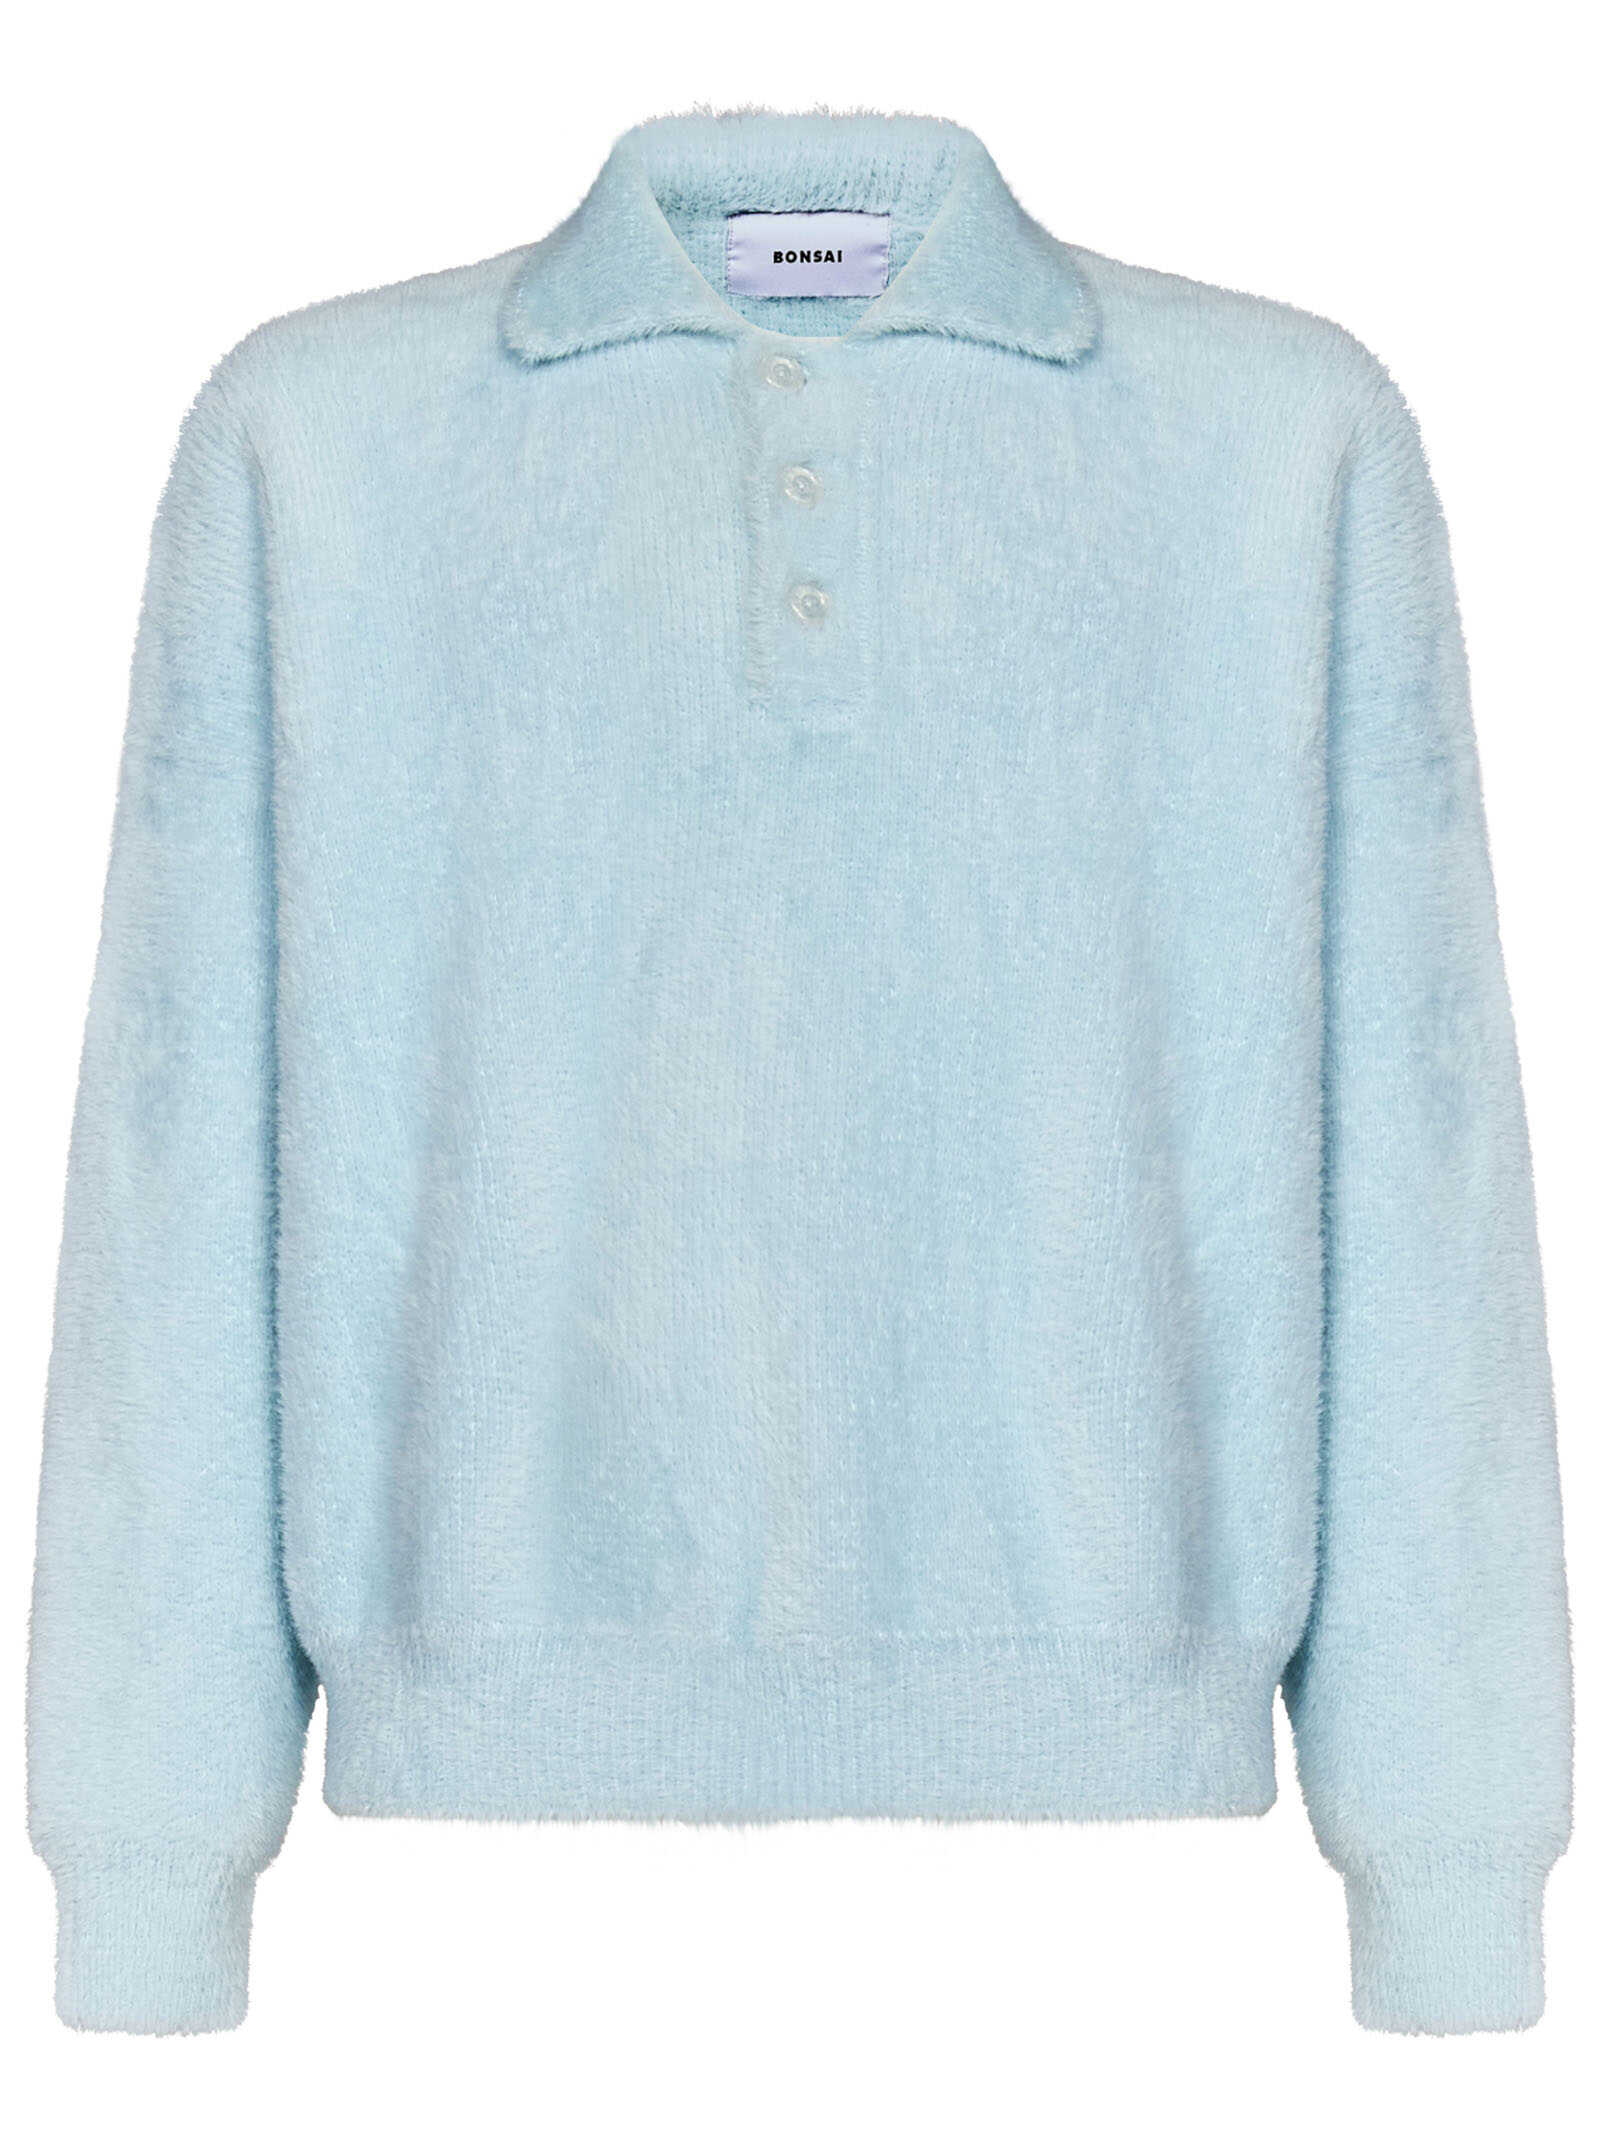 BONSAI Sweaters Clear Blue Blue